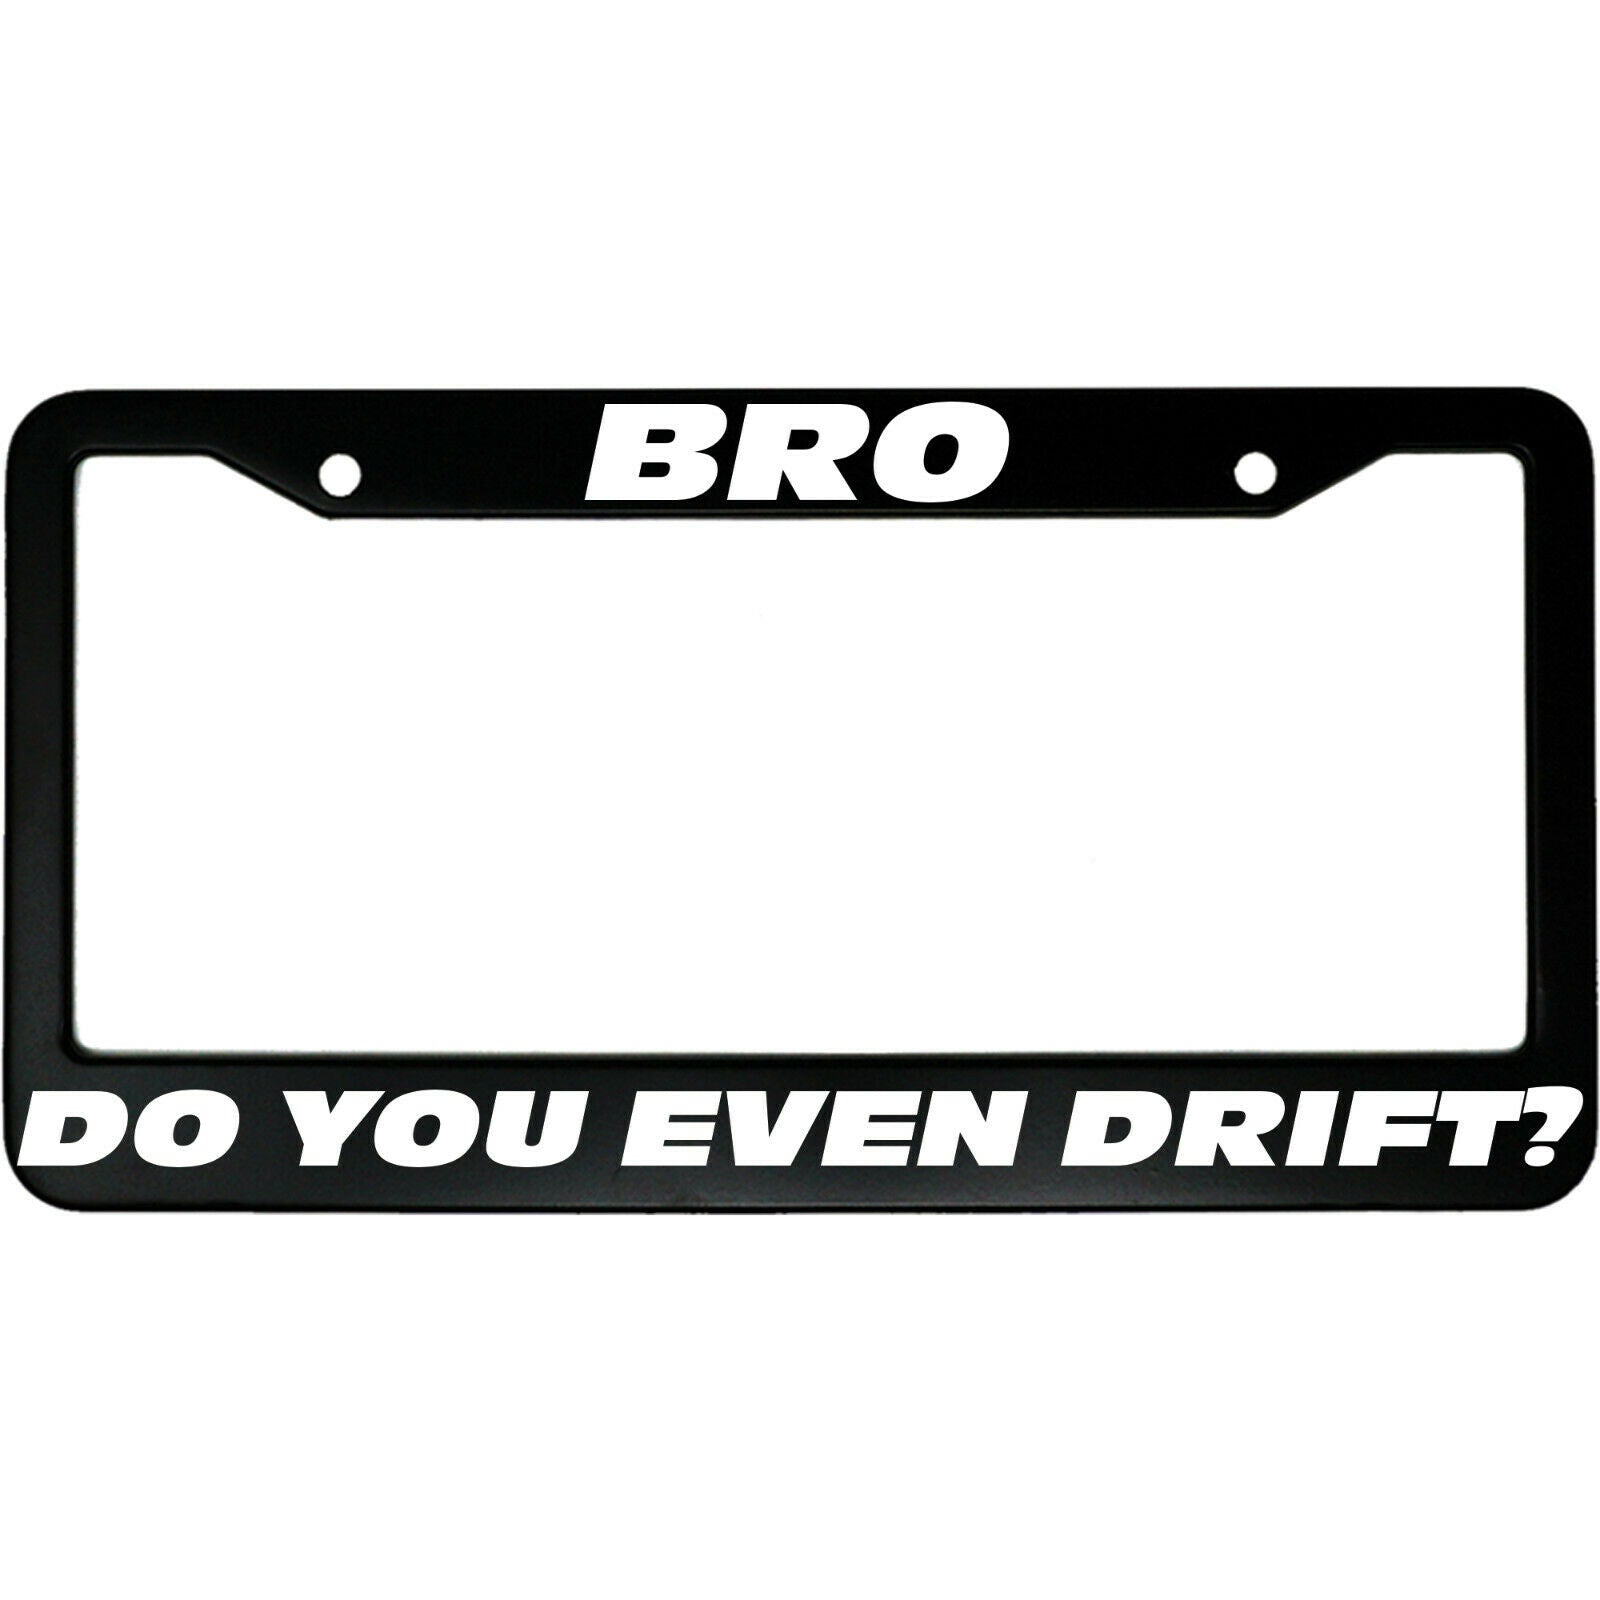 Bro Do You Even Drifts Aluminum Car License Plate Frame